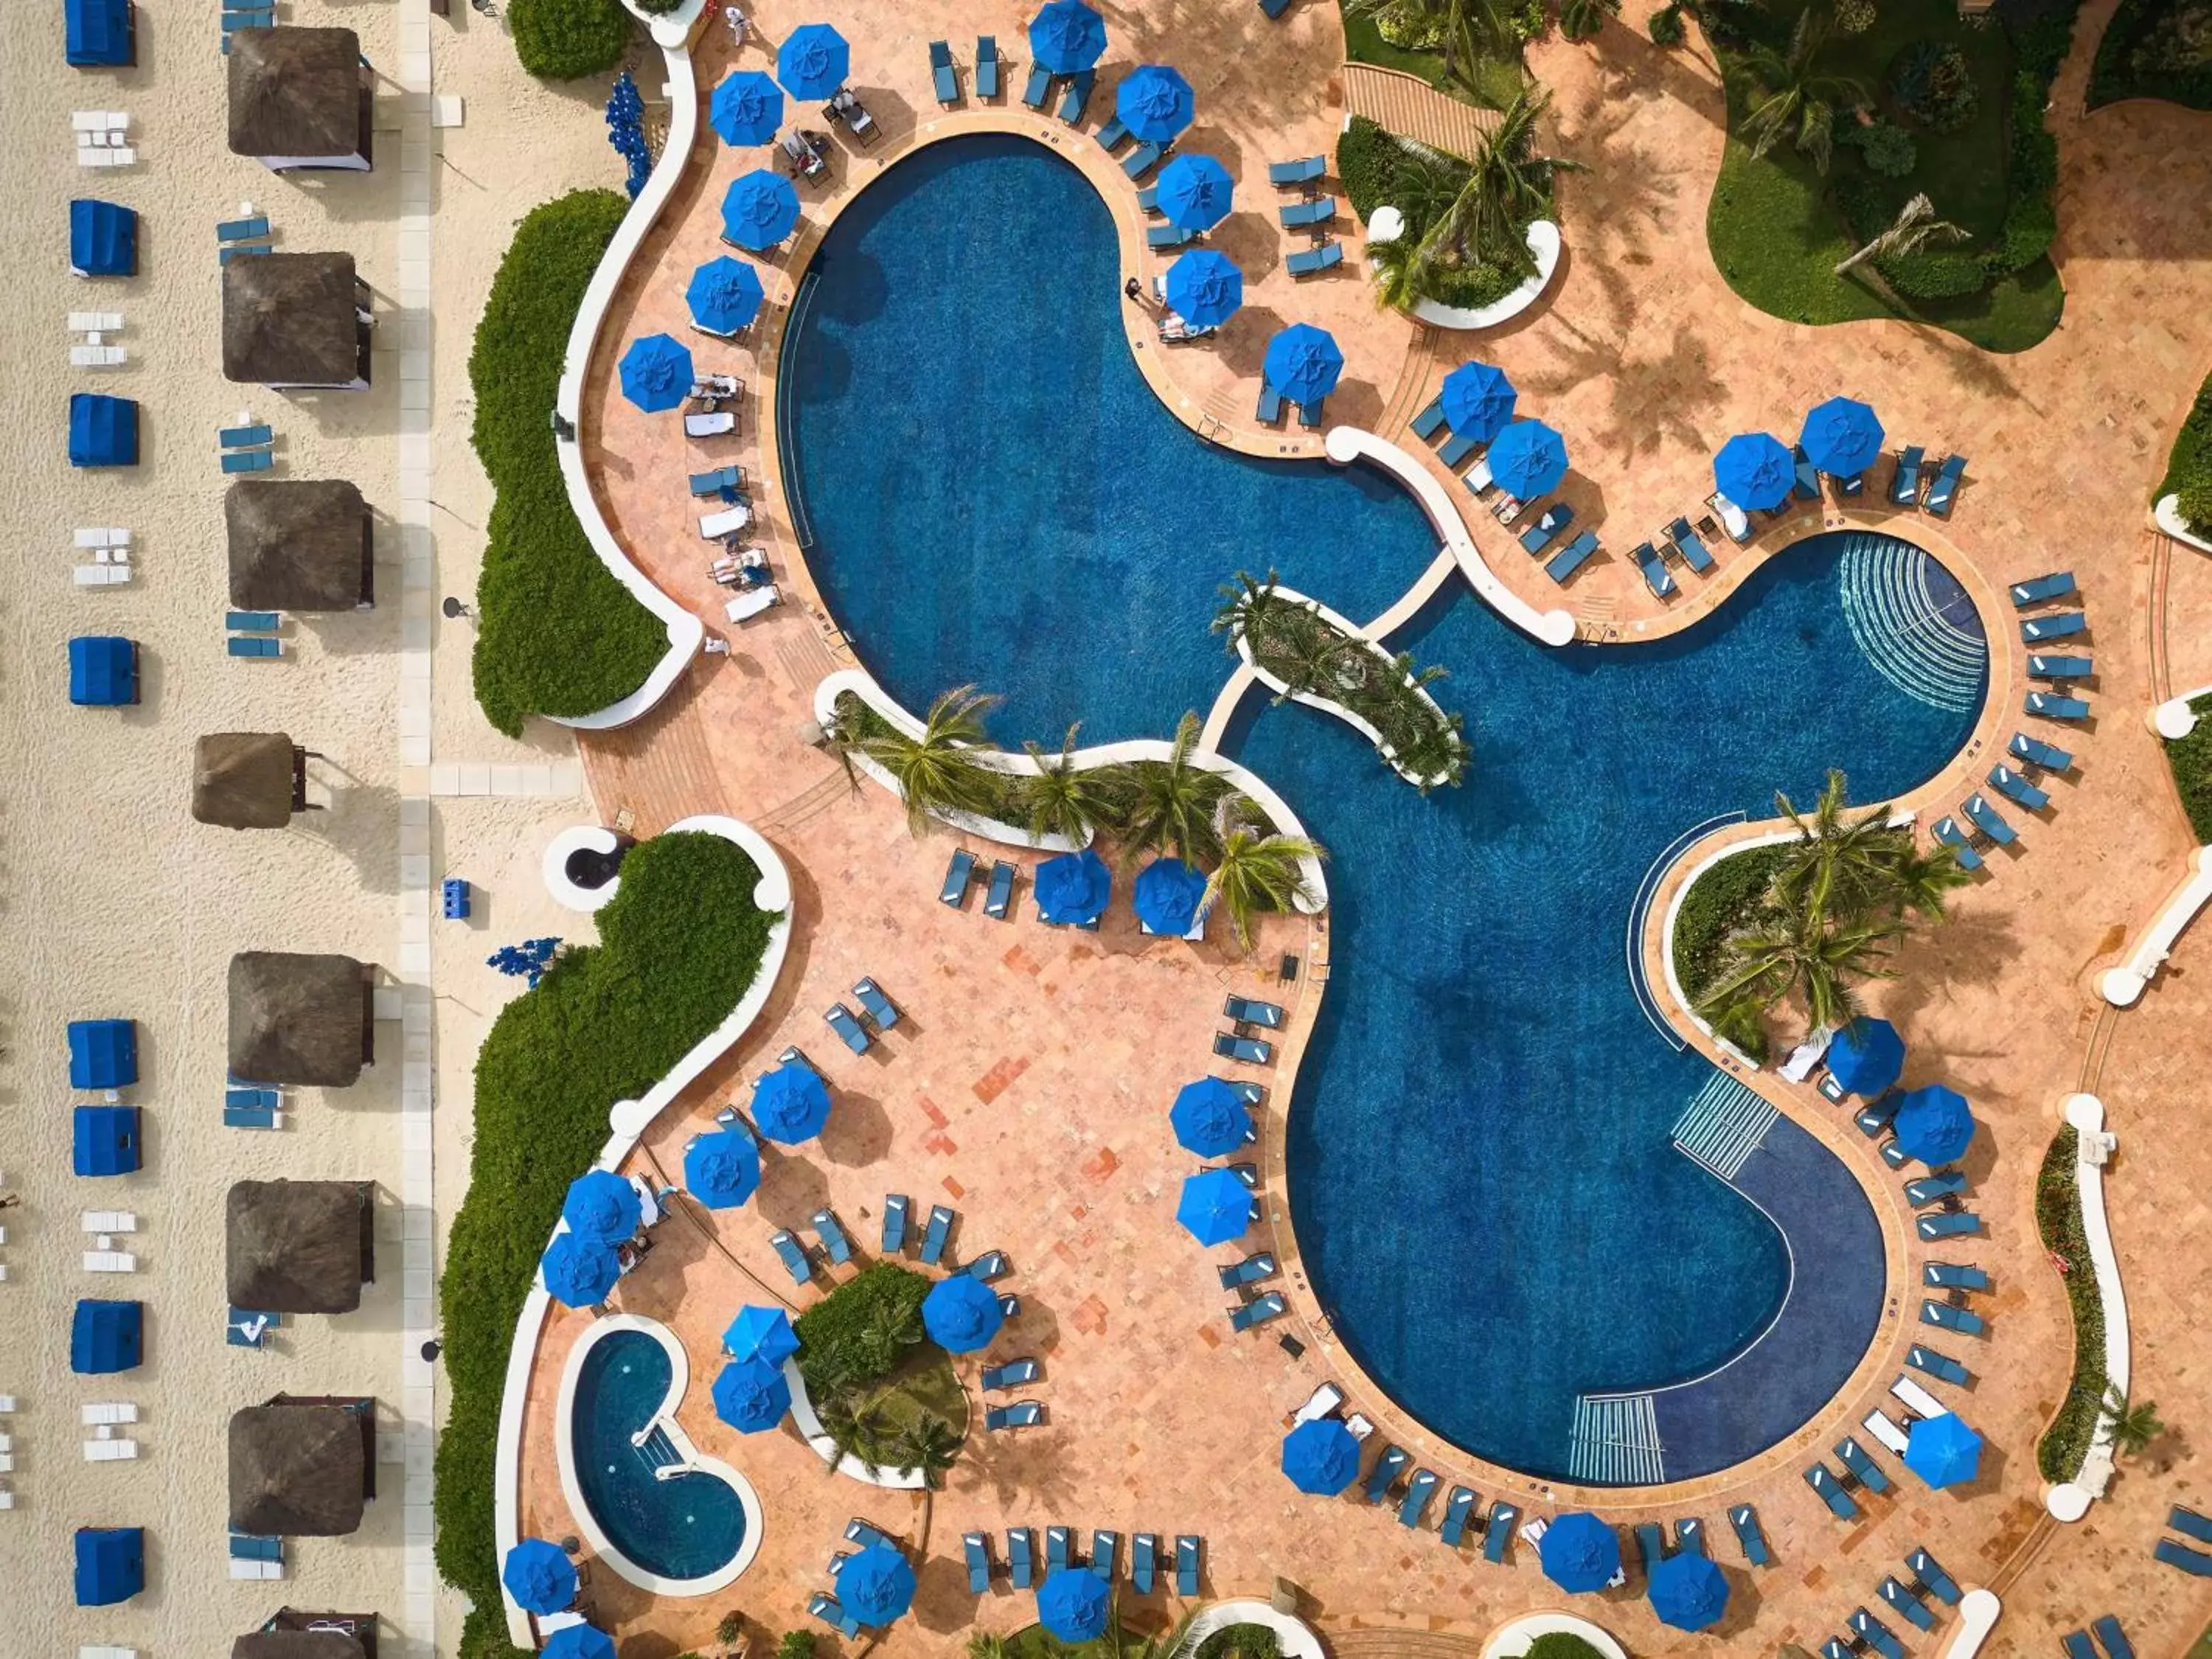 Swimming pool, Pool View in Kempinski Hotel Cancun